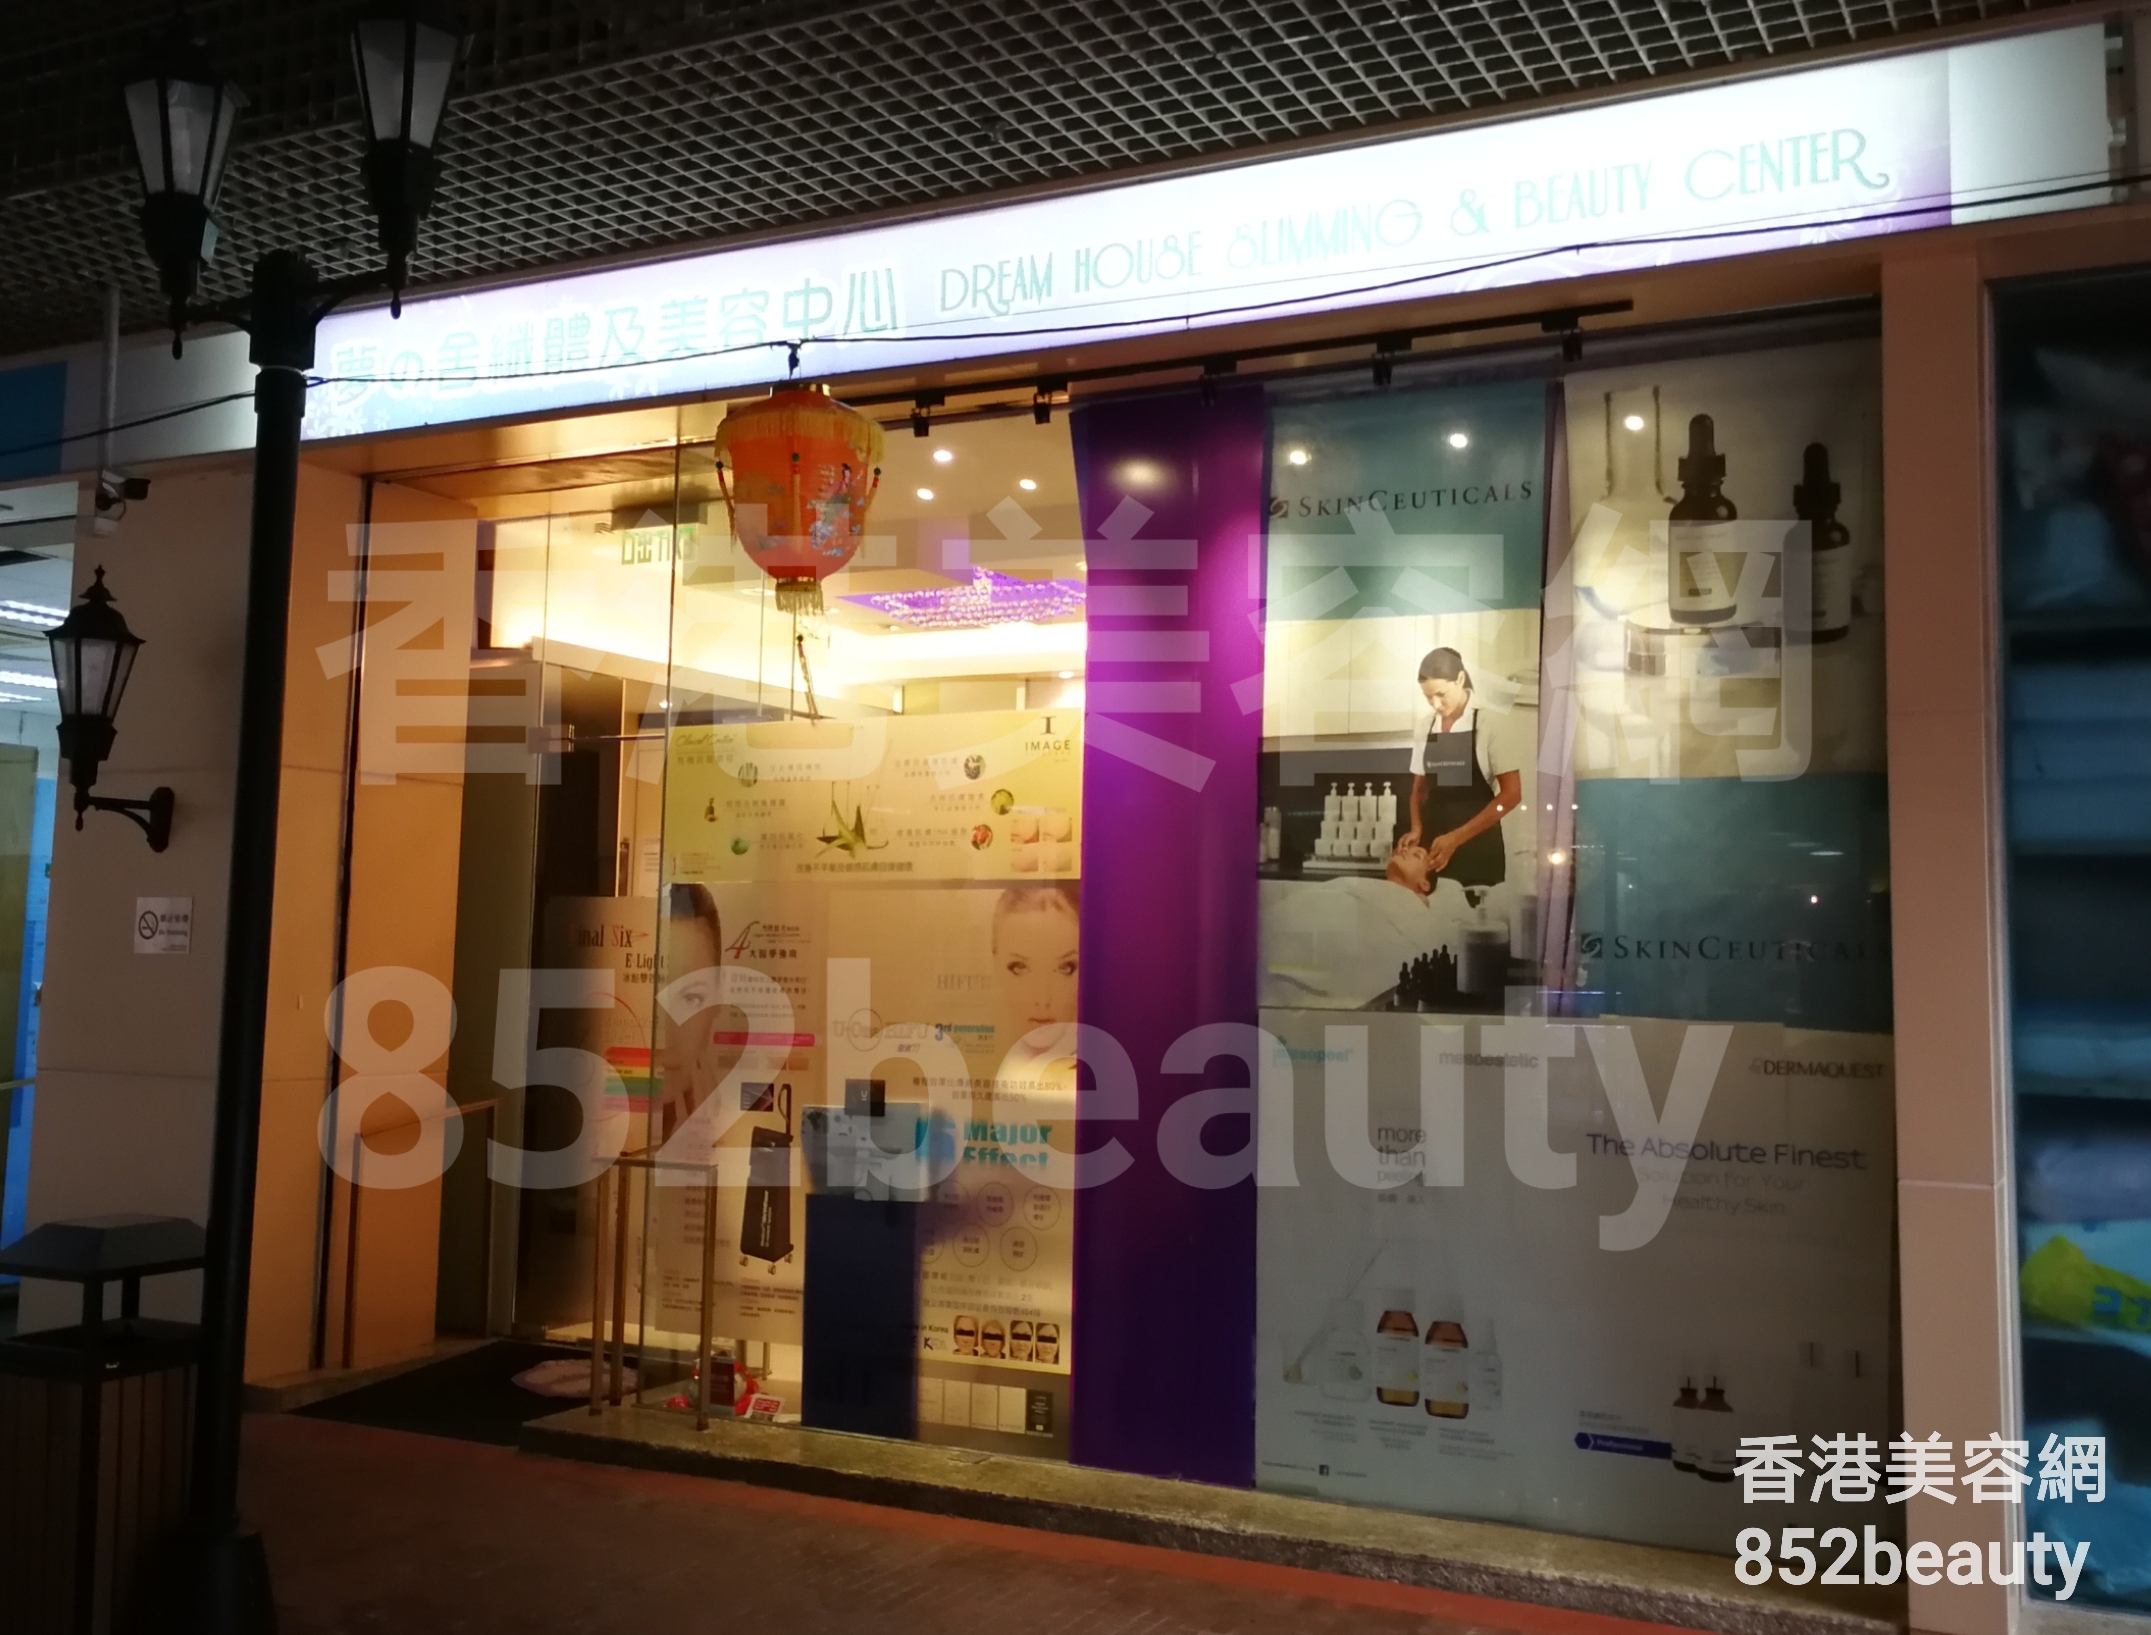 香港美容網 Hong Kong Beauty Salon 美容院 / 美容師: 夢の舍纖體及美容中心 DREAM HOUSE SLIMMING & BEAUTY CENTER